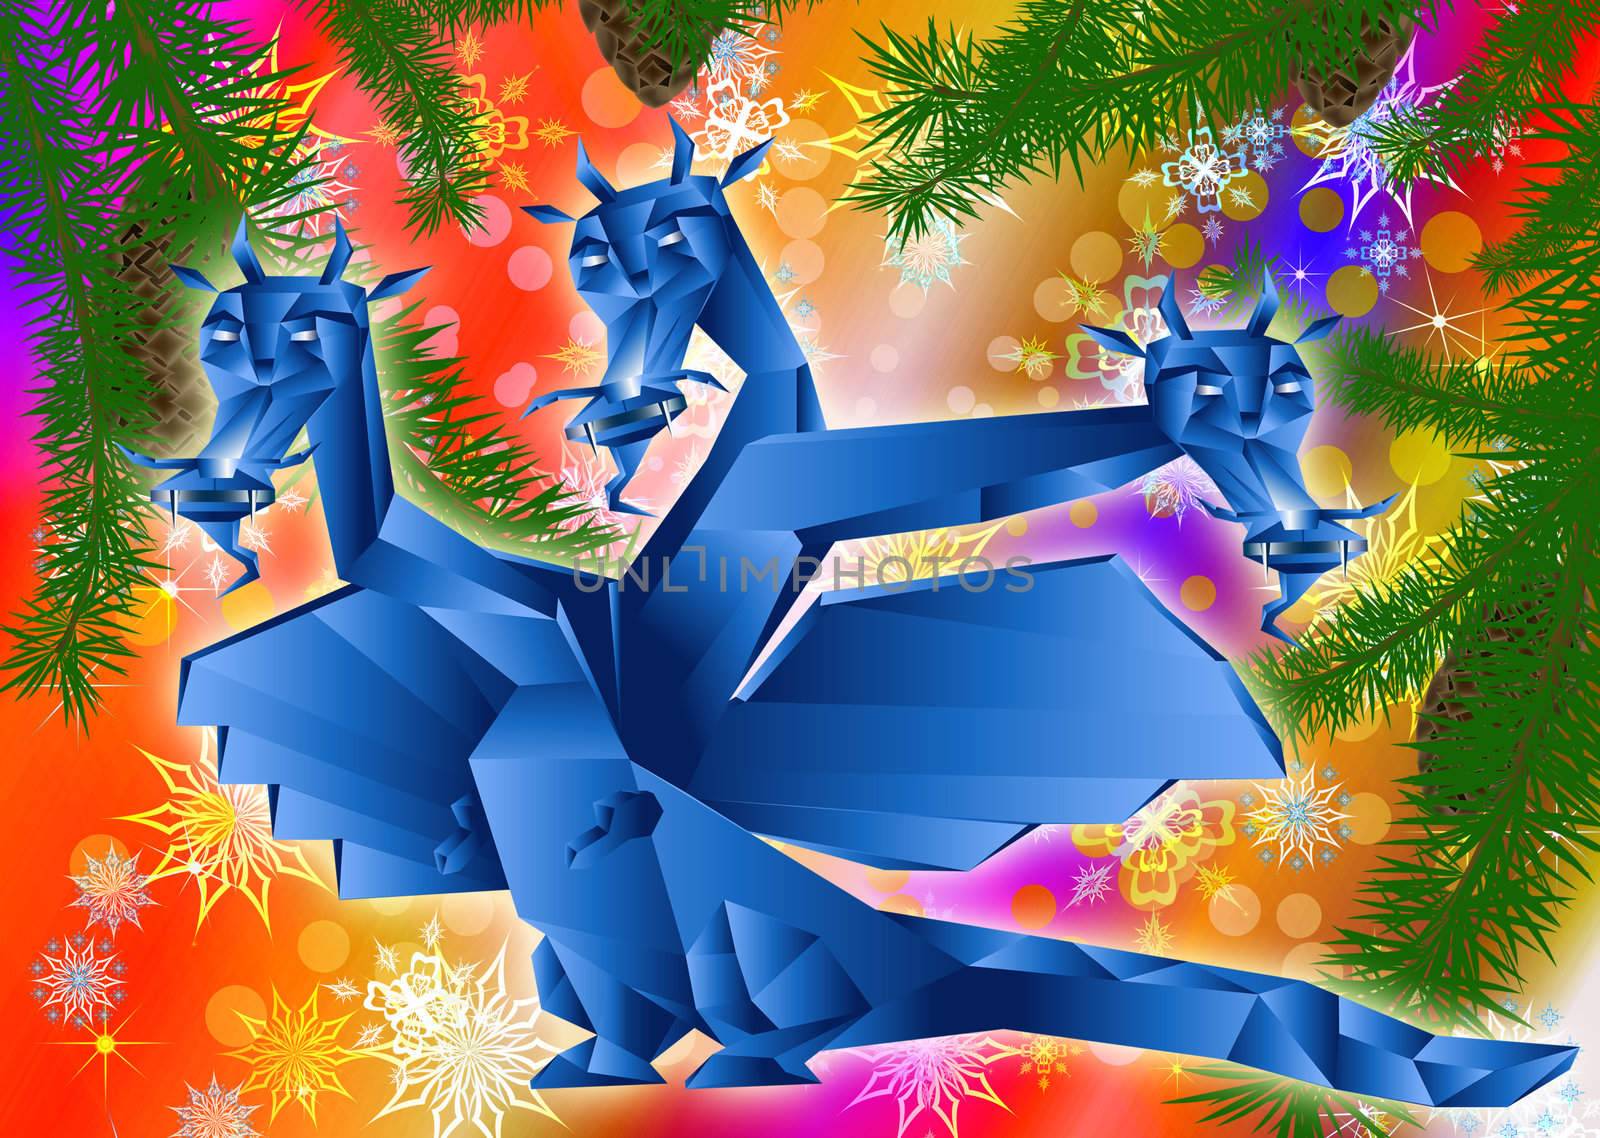 Fantastic dragon a symbol 2012 new years by sergey150770SV